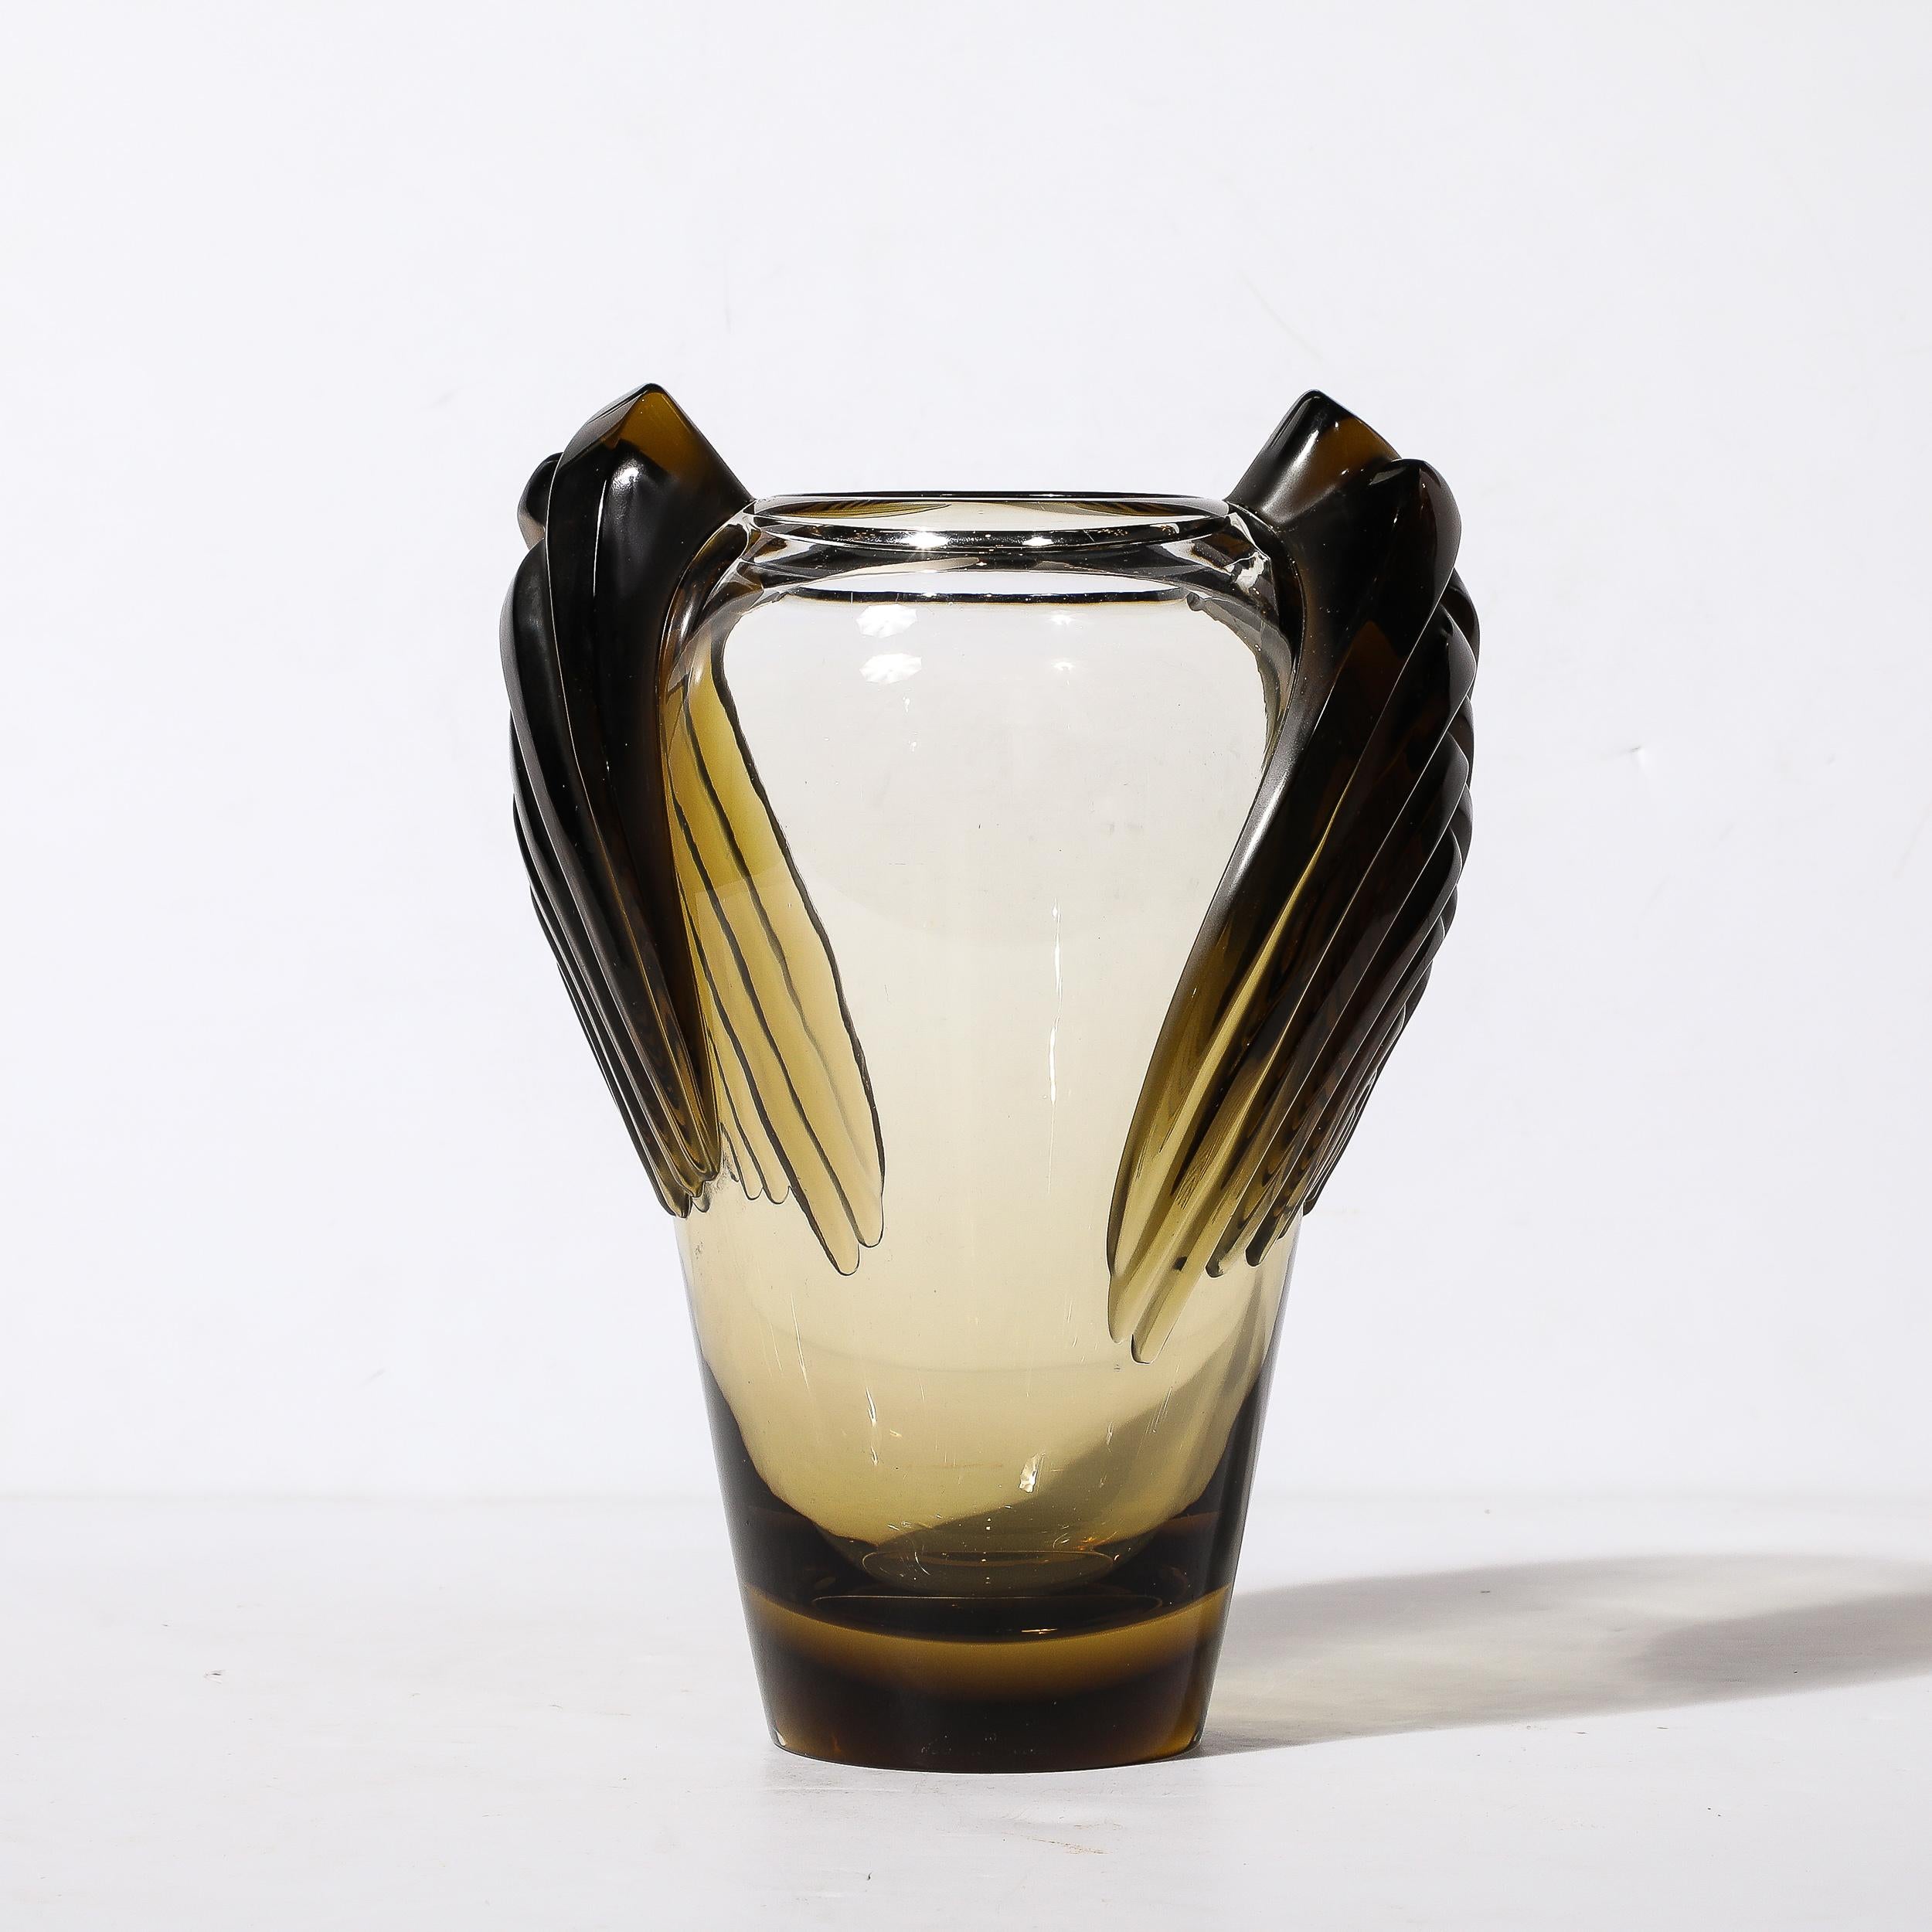 French Art Deco Style Marrakech Vase signed Lalique